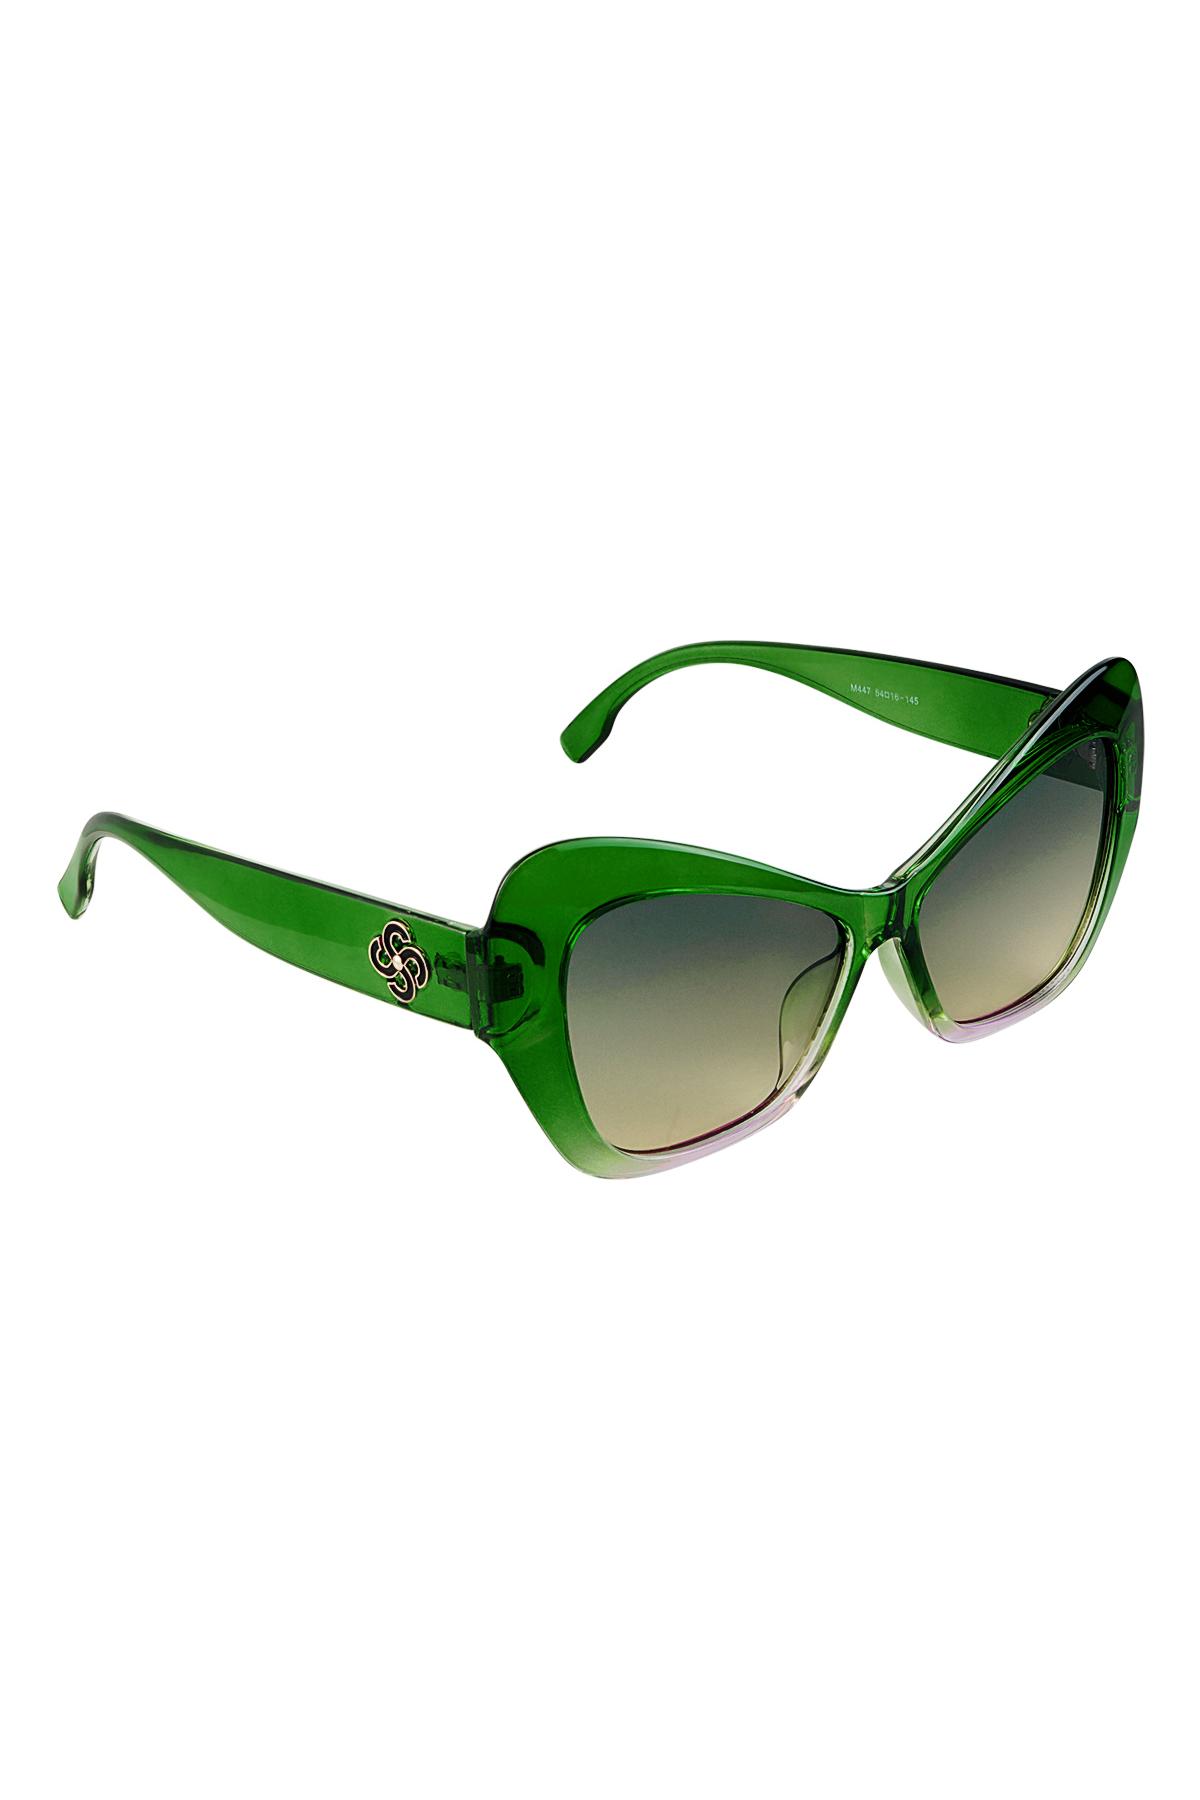 Sunglasses statement Green PC One size